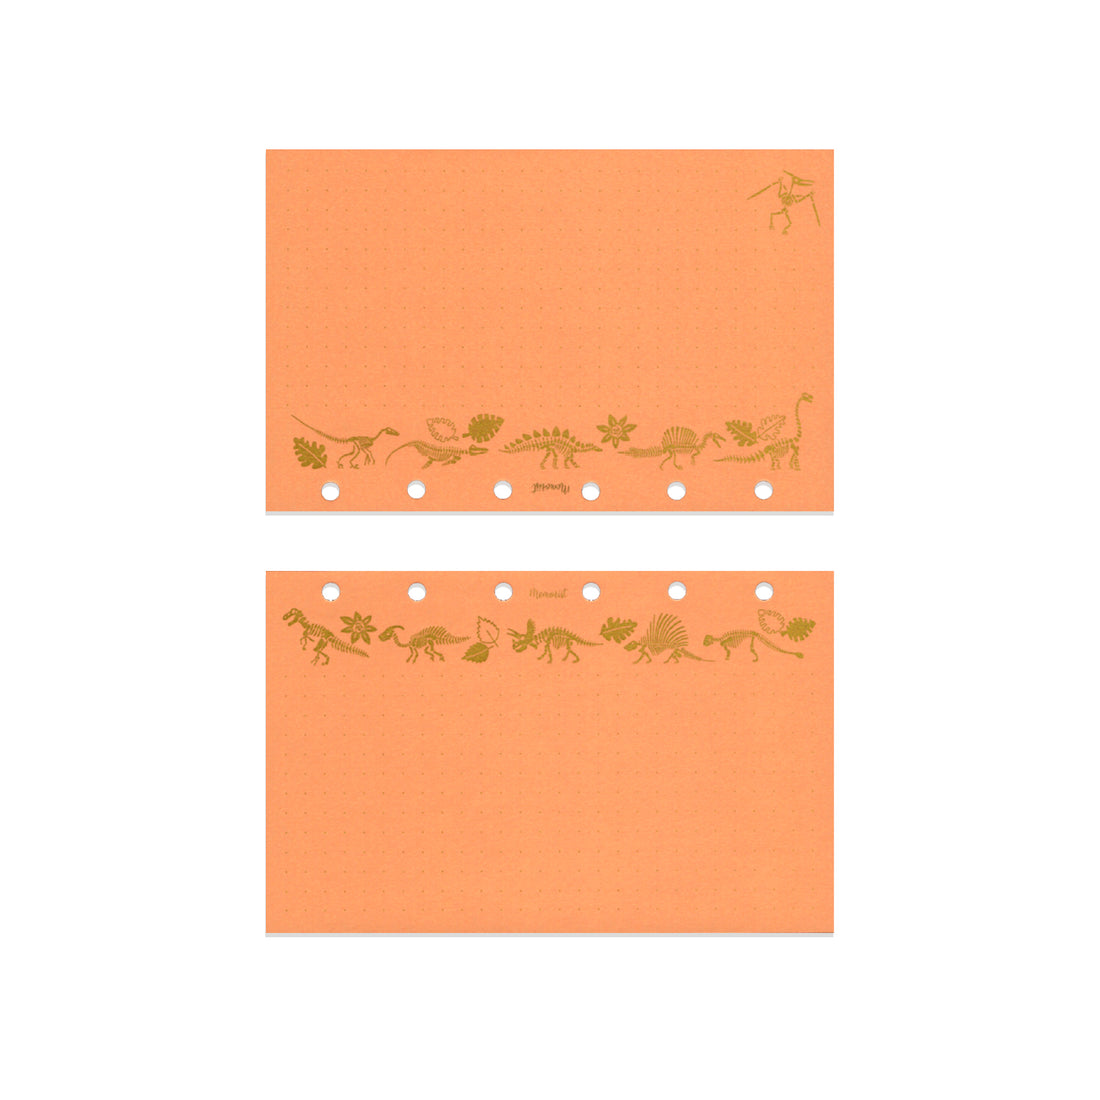 Dotted-Grid Color Sideway Refill【Orange x Dino】(Pocket Size)